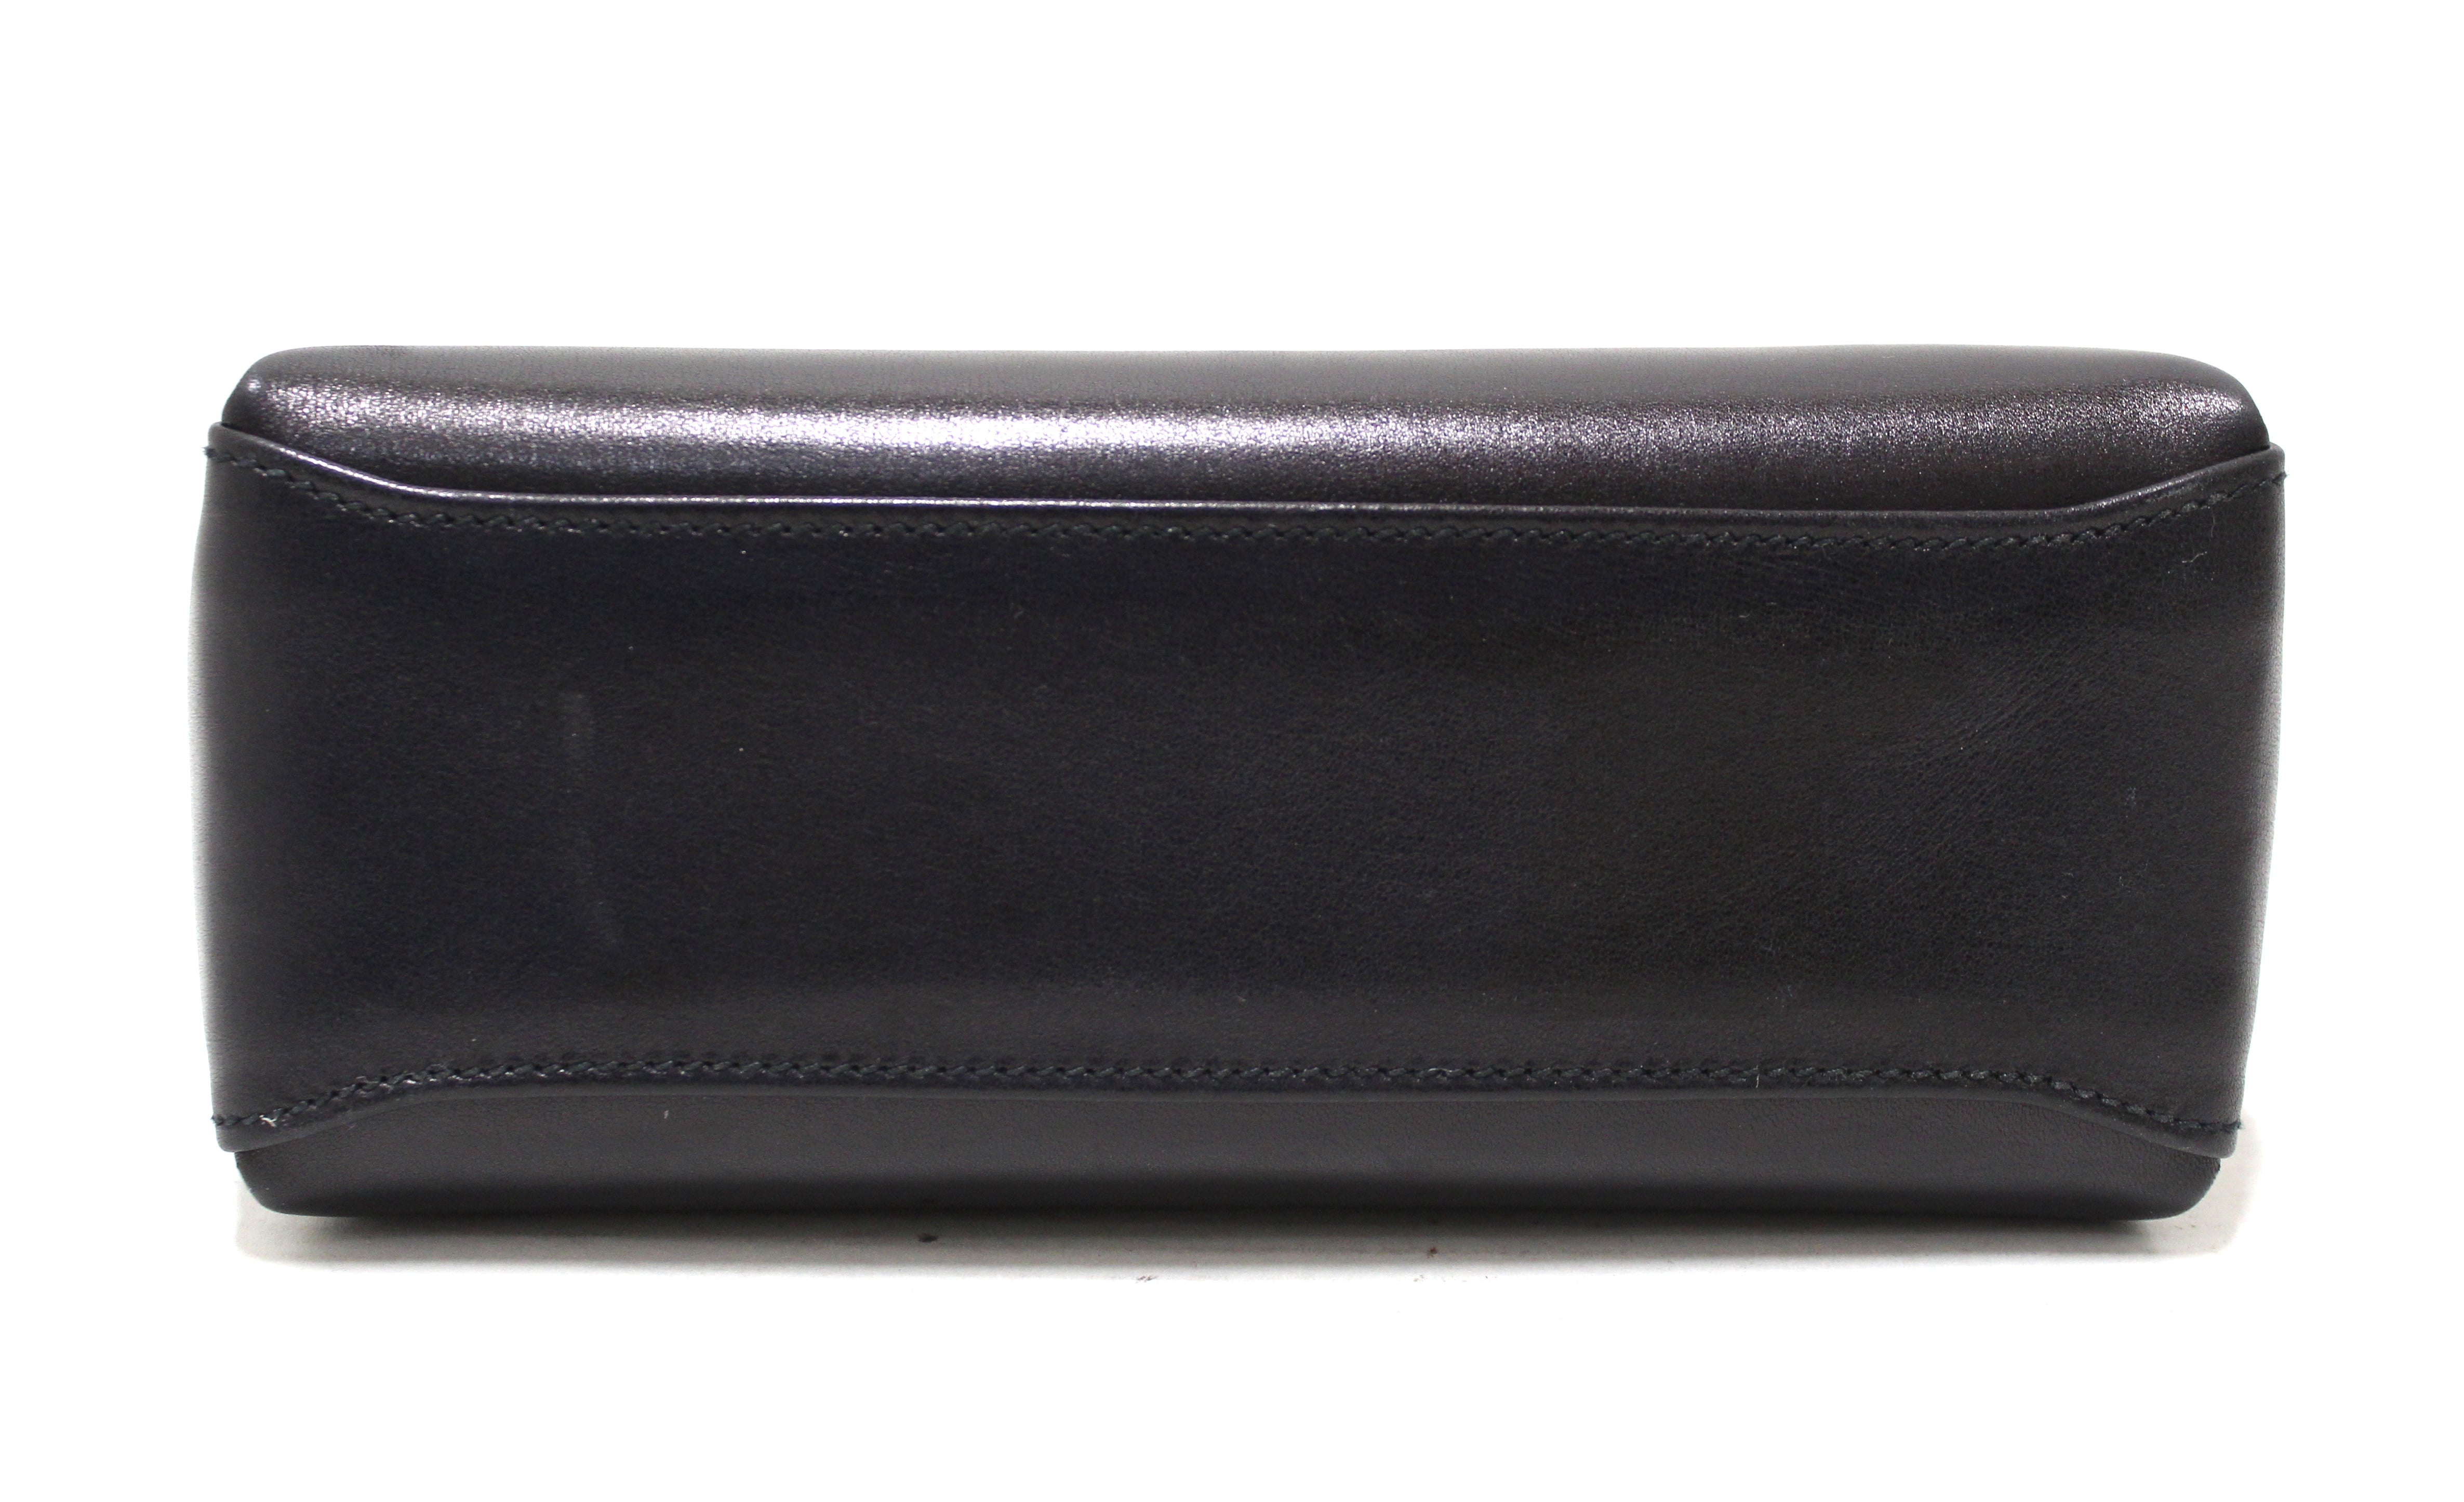 Authentic Gucci Black Vintage Leather Handbag